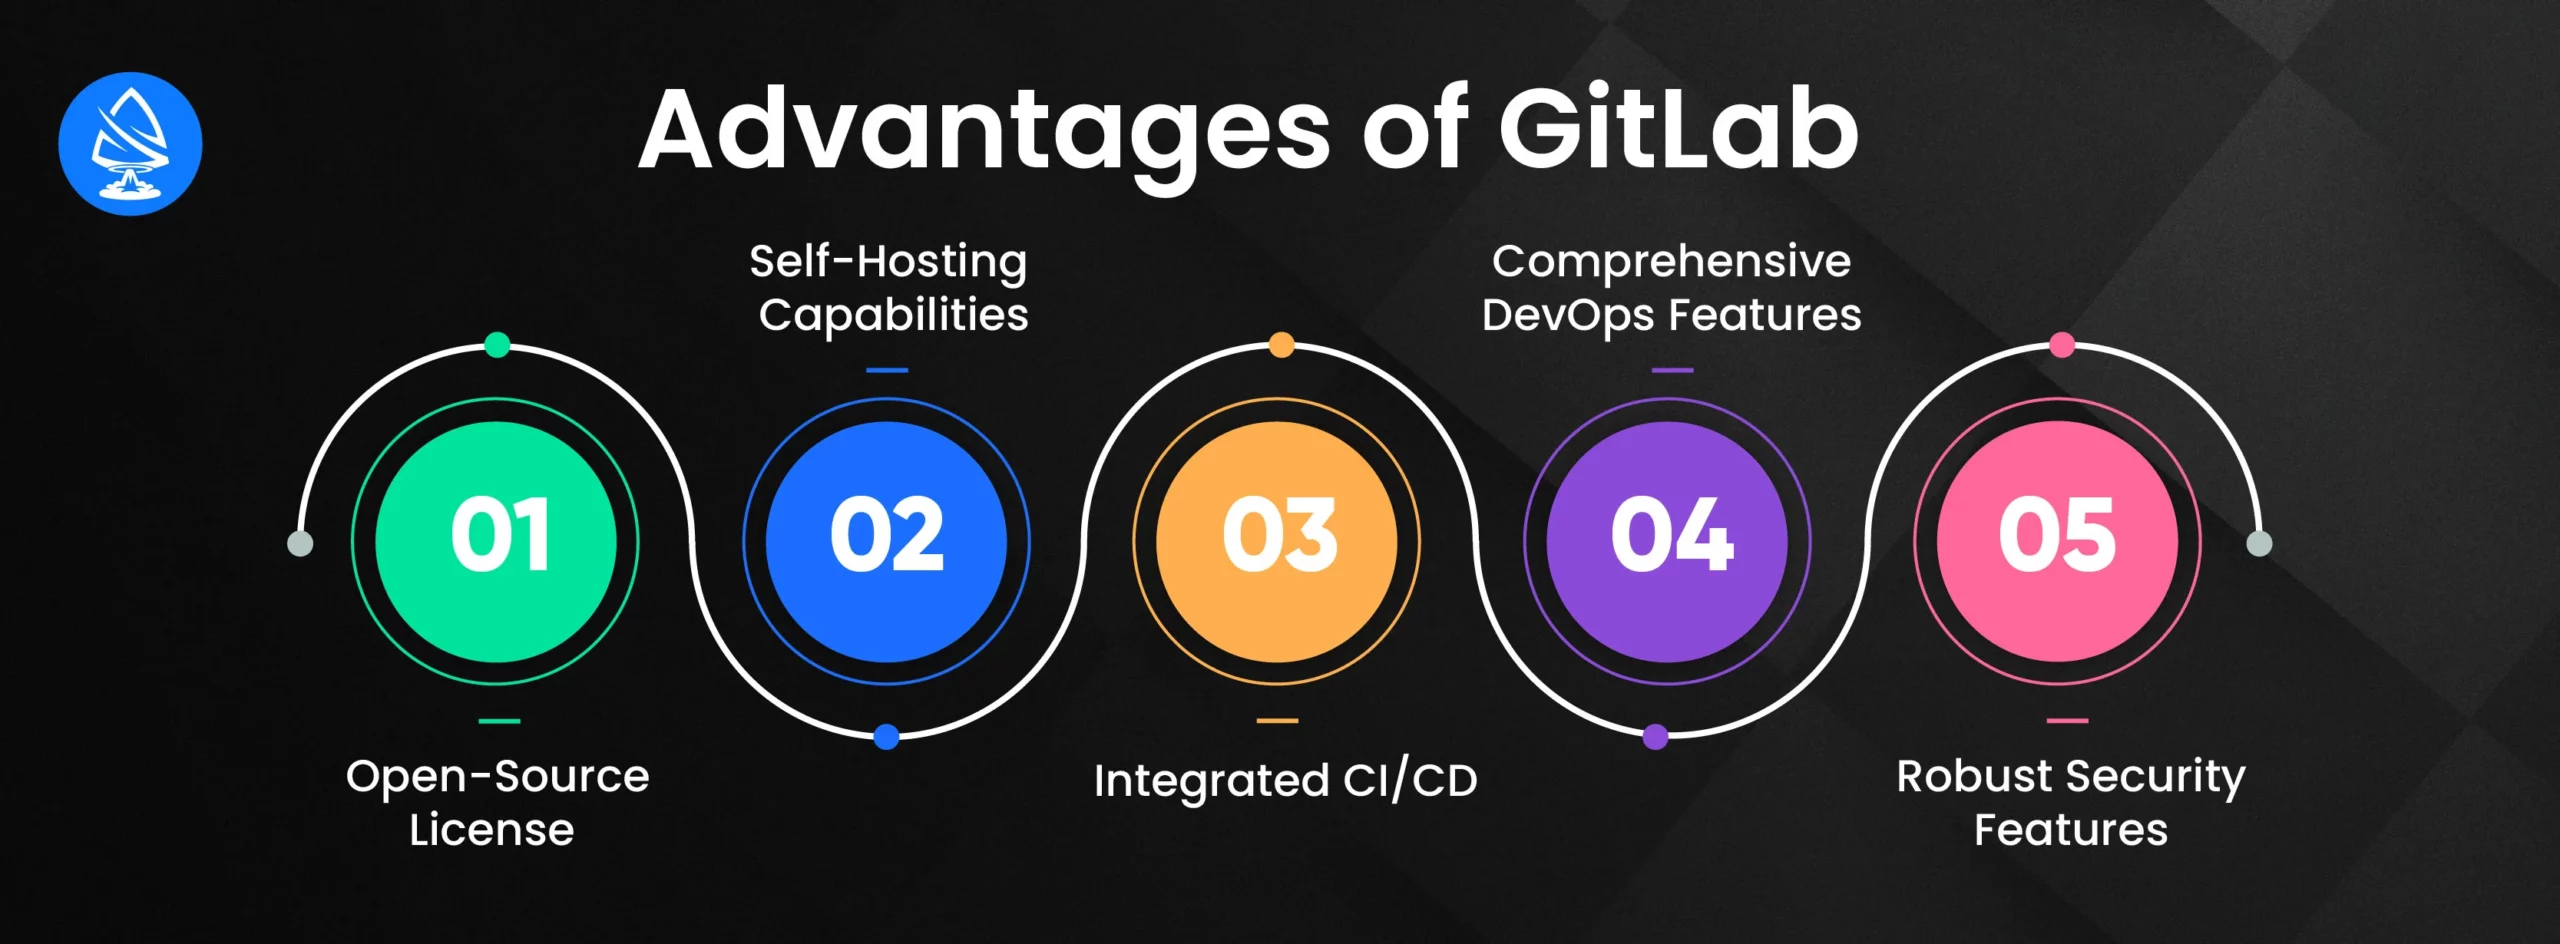 Advantages of GitLab 